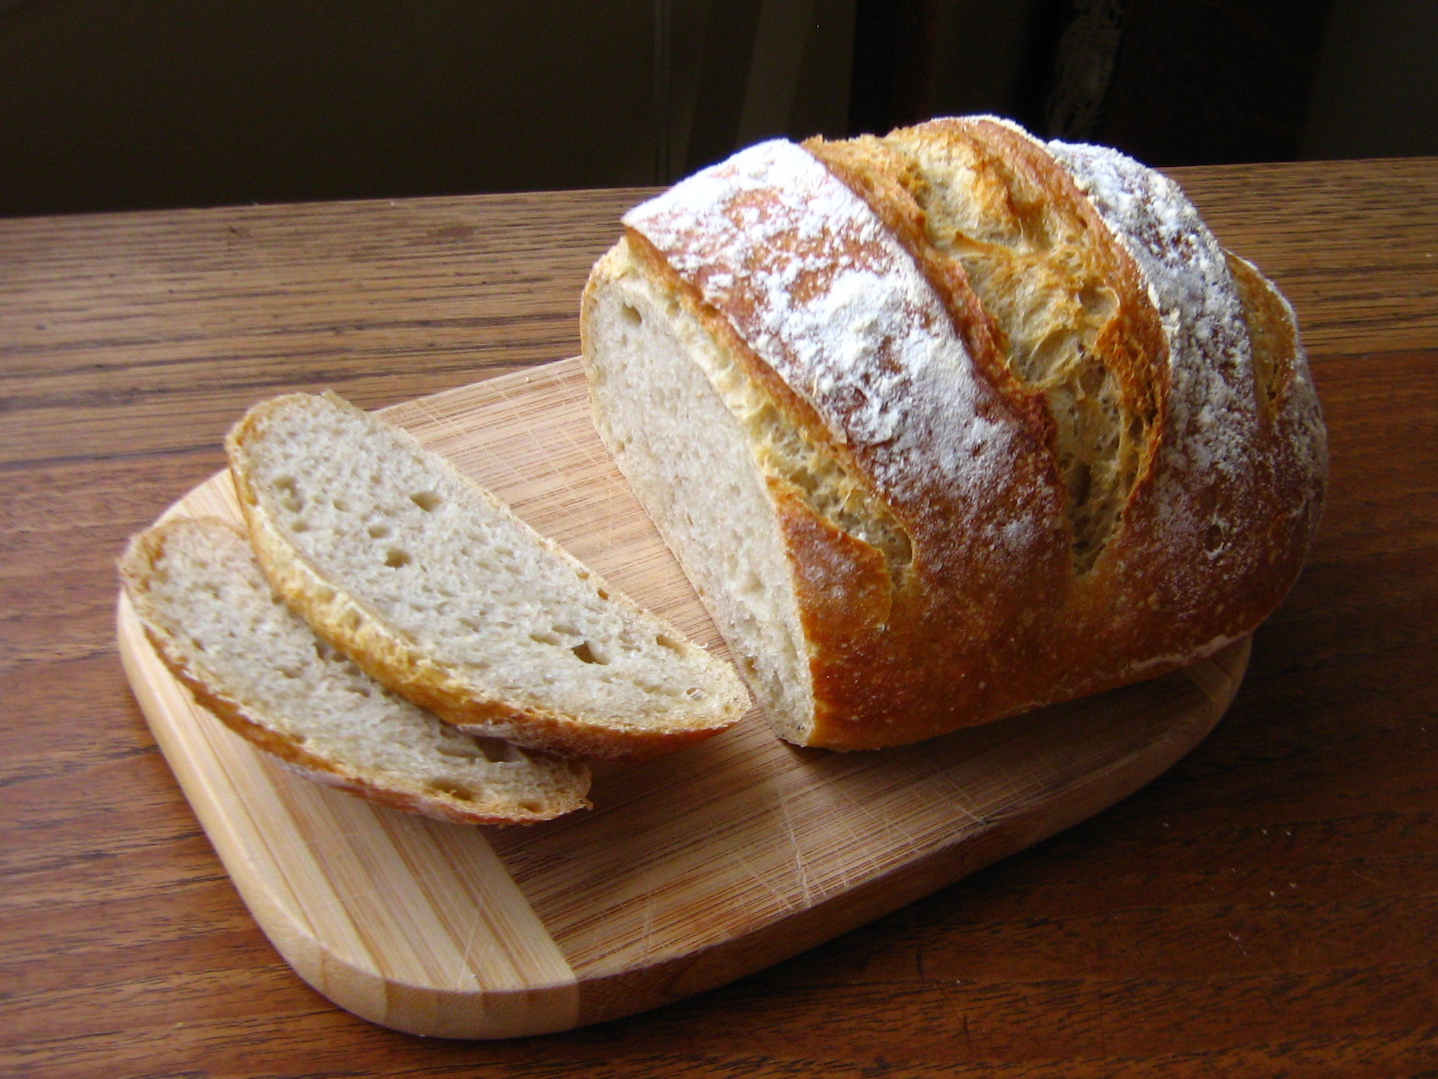 Crock Pot Bread Recipe - Artisan Bread in Five Minutes a Day